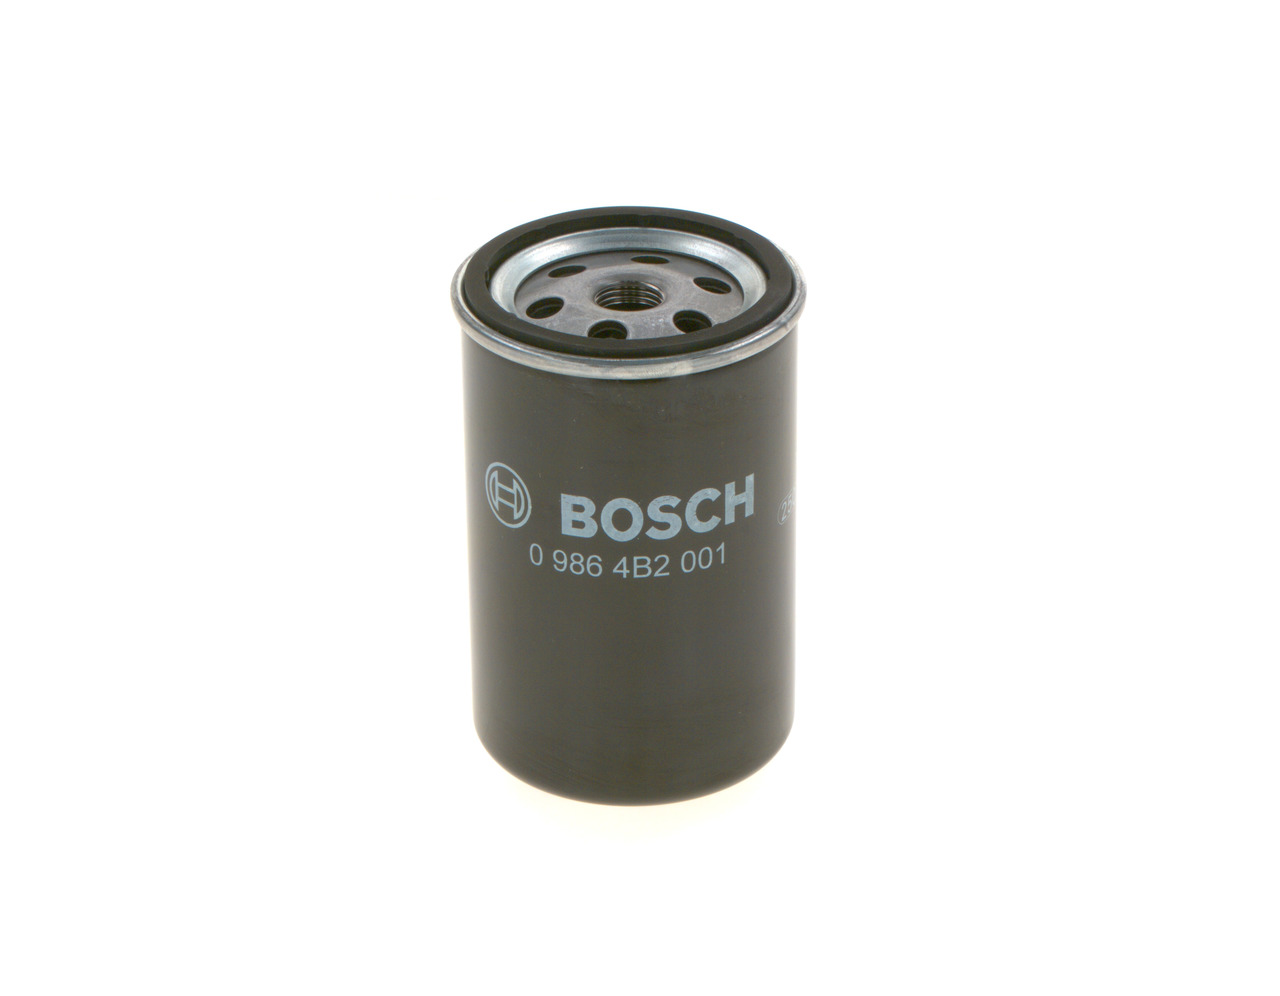 NM 001 BOSCH 09864B2001 Fuel filter 1505-64